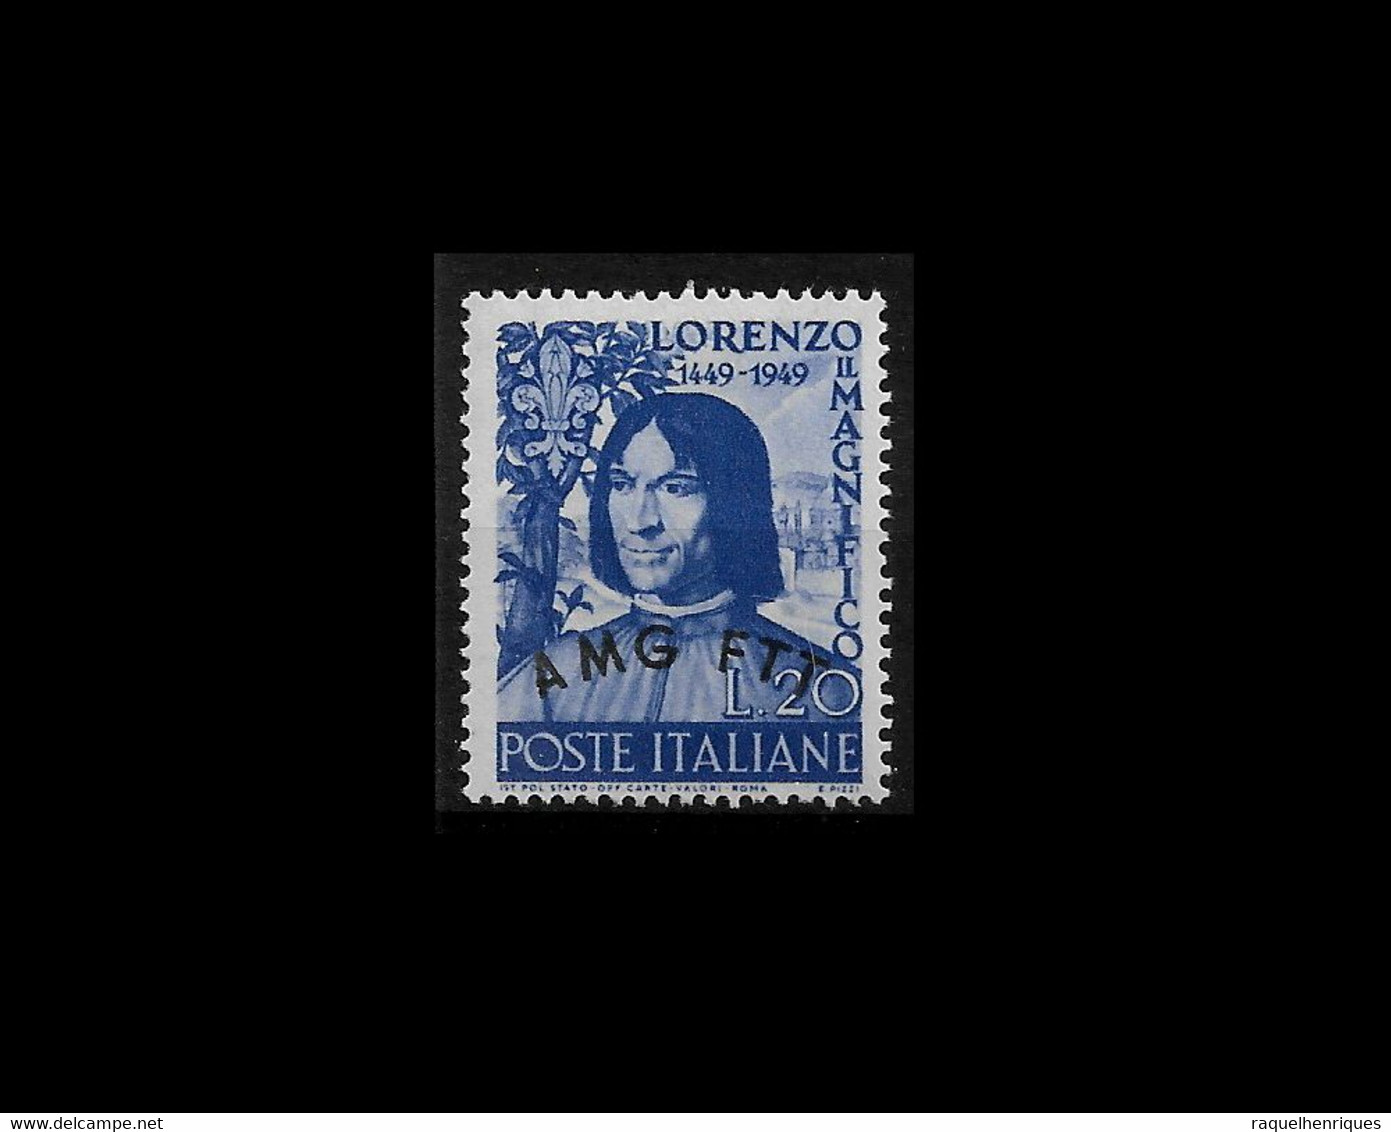 ITALY STAMP - TRIESTE ZONE A - 1949 The 500th An.Birth Of Lorenzo Medici - AMG FTT MH (BA5#58) - Ägäis (Aut. Reg.)